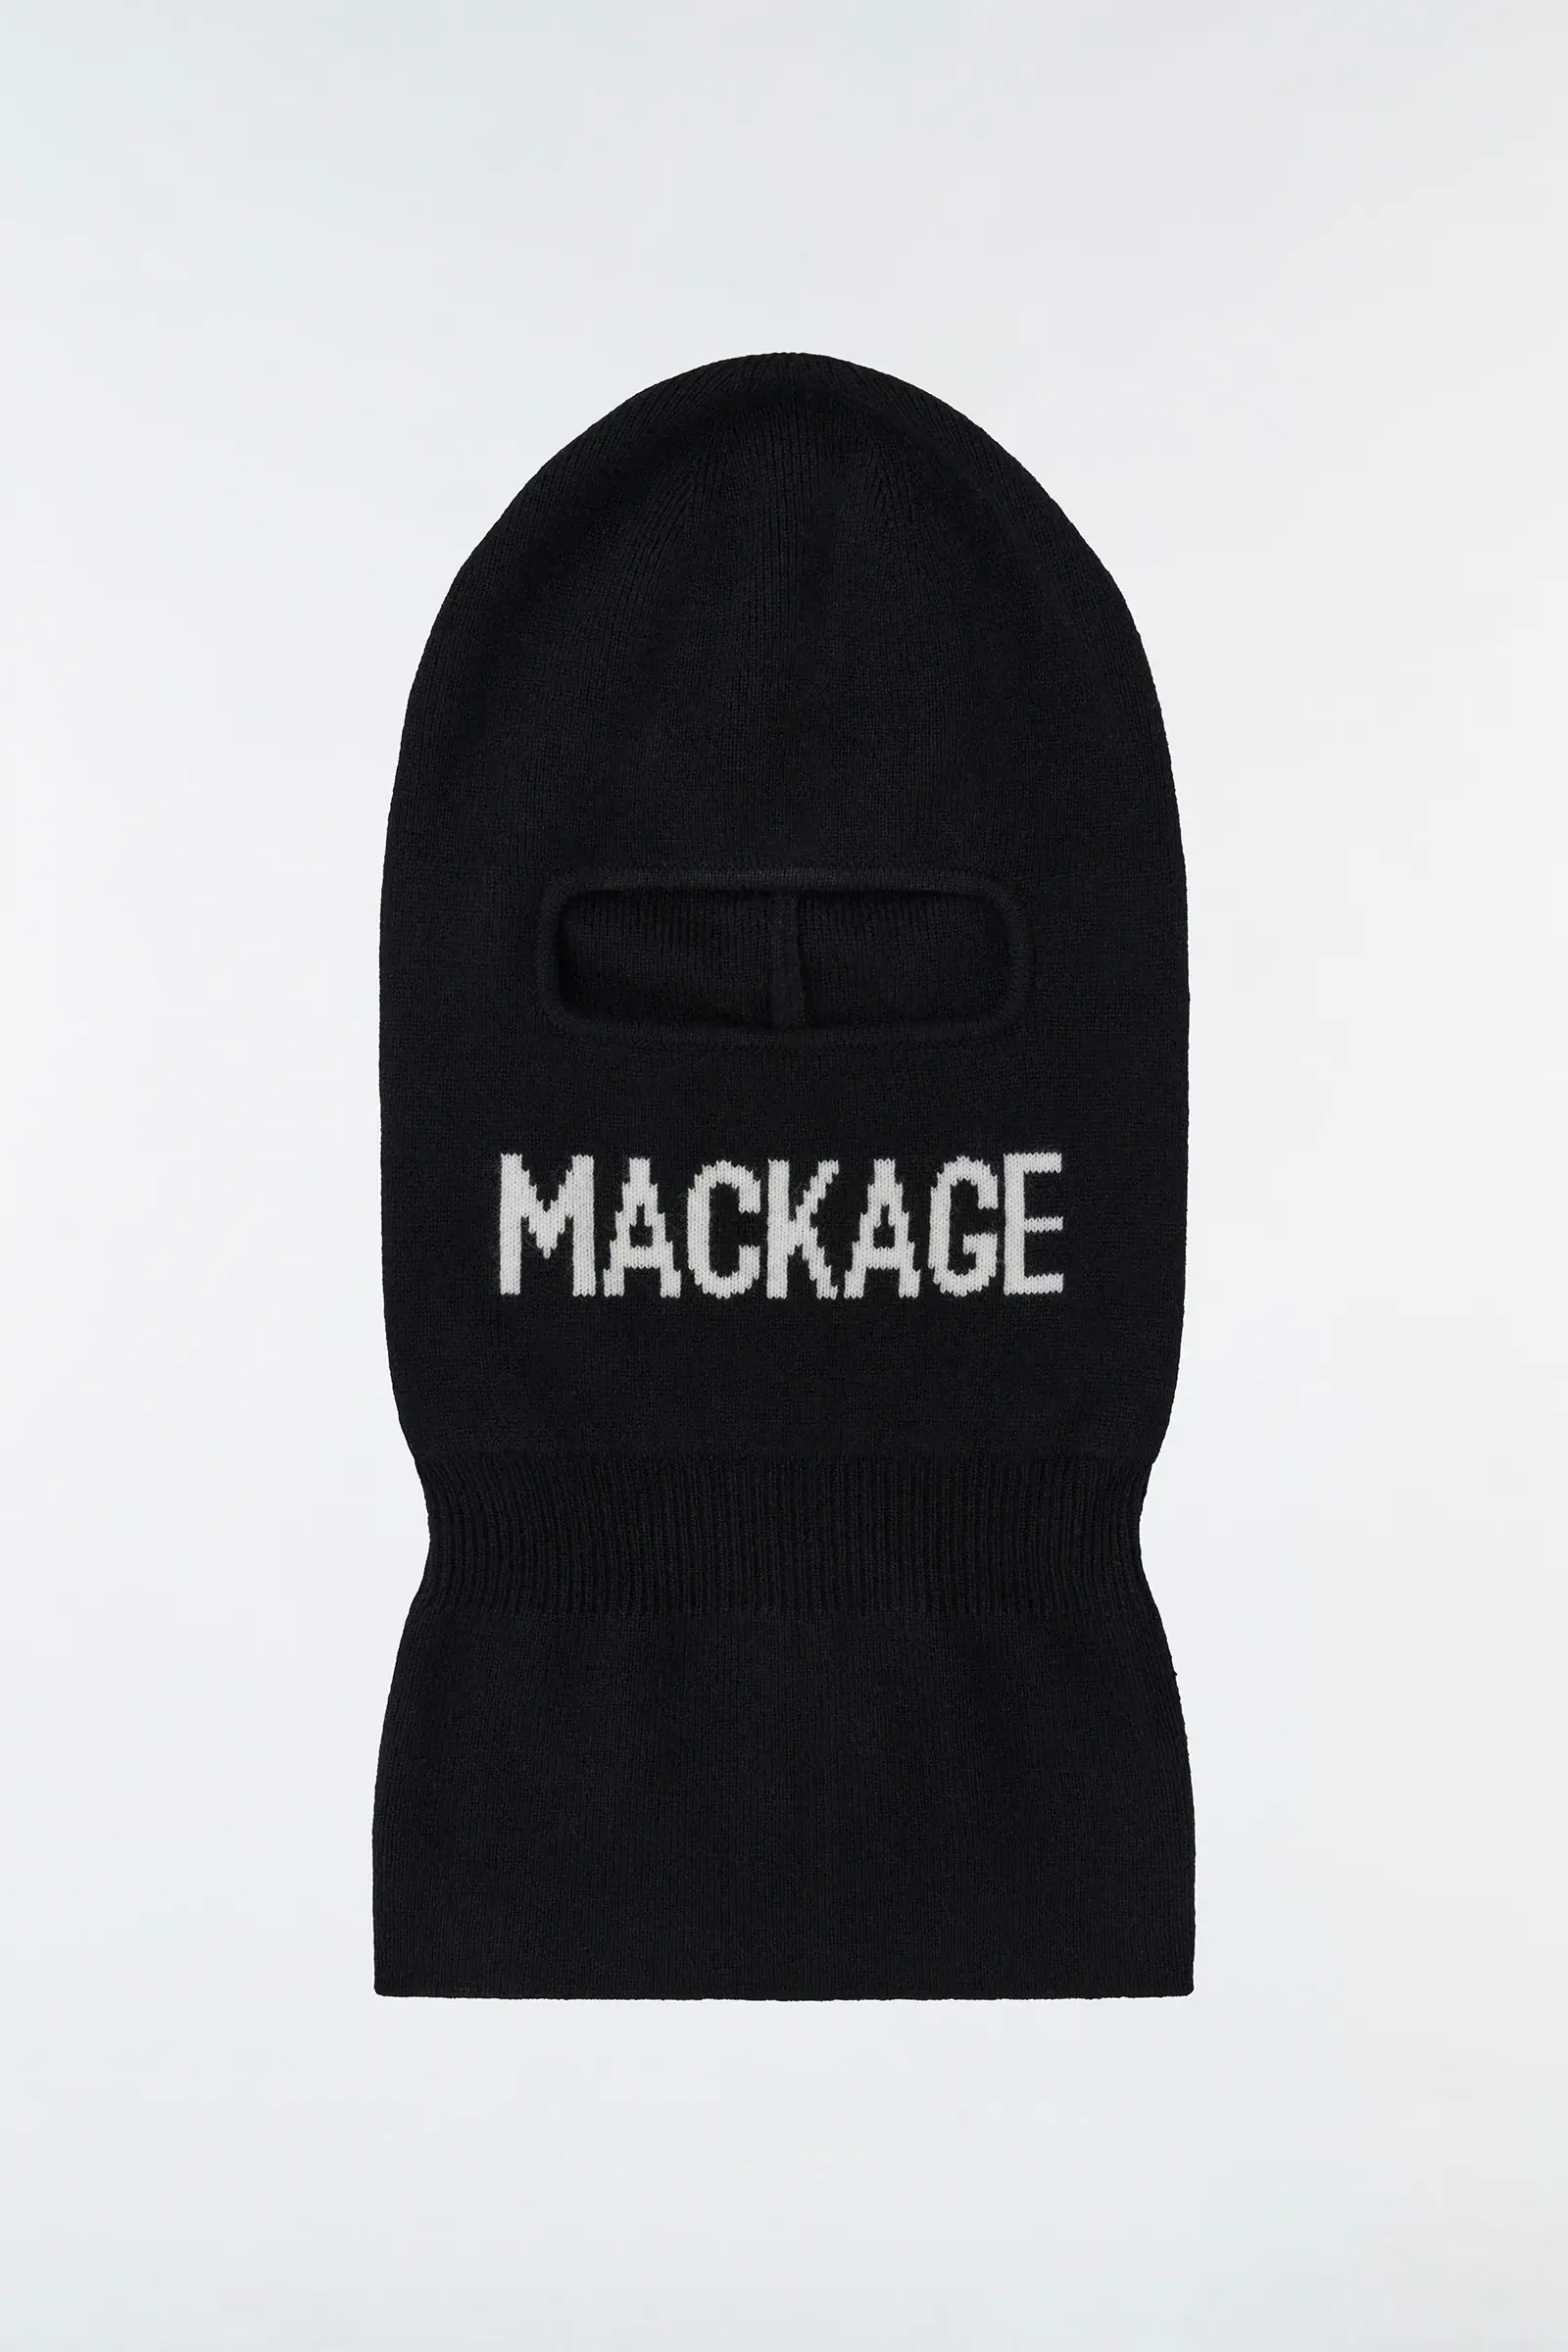 Mackage BALA - Black / O/S. 1